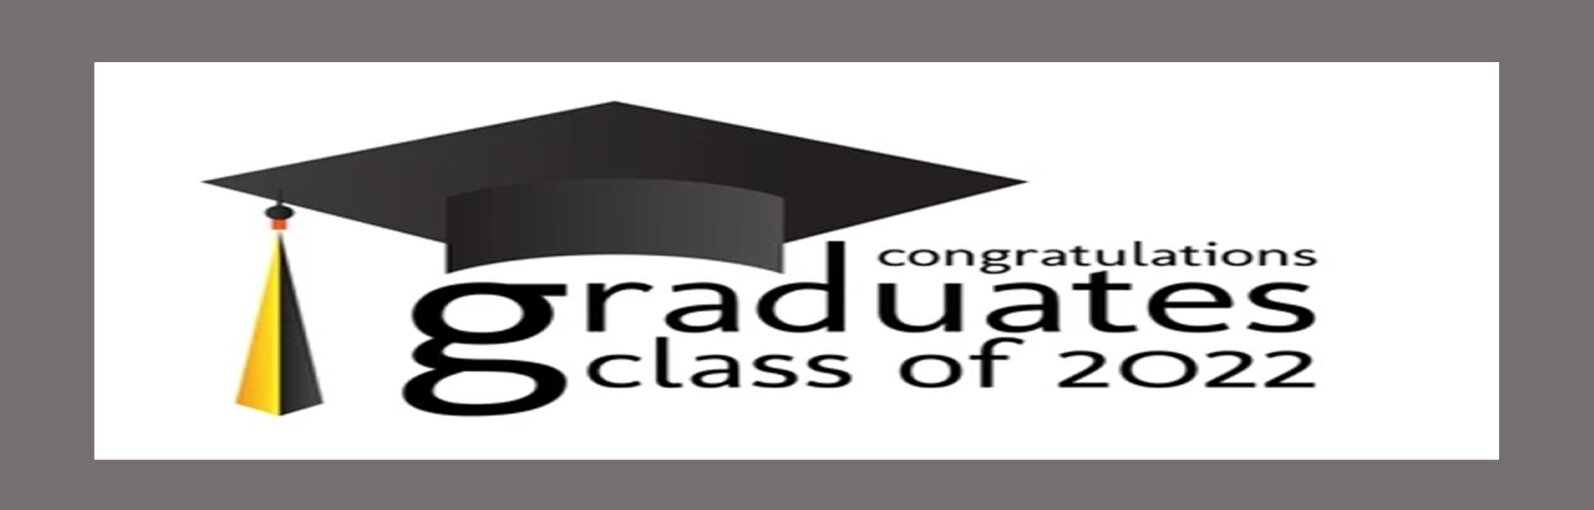 /images/r/congrats-grads-2022-banner/c1594x510/congrats-grads-2022-banner.jpg